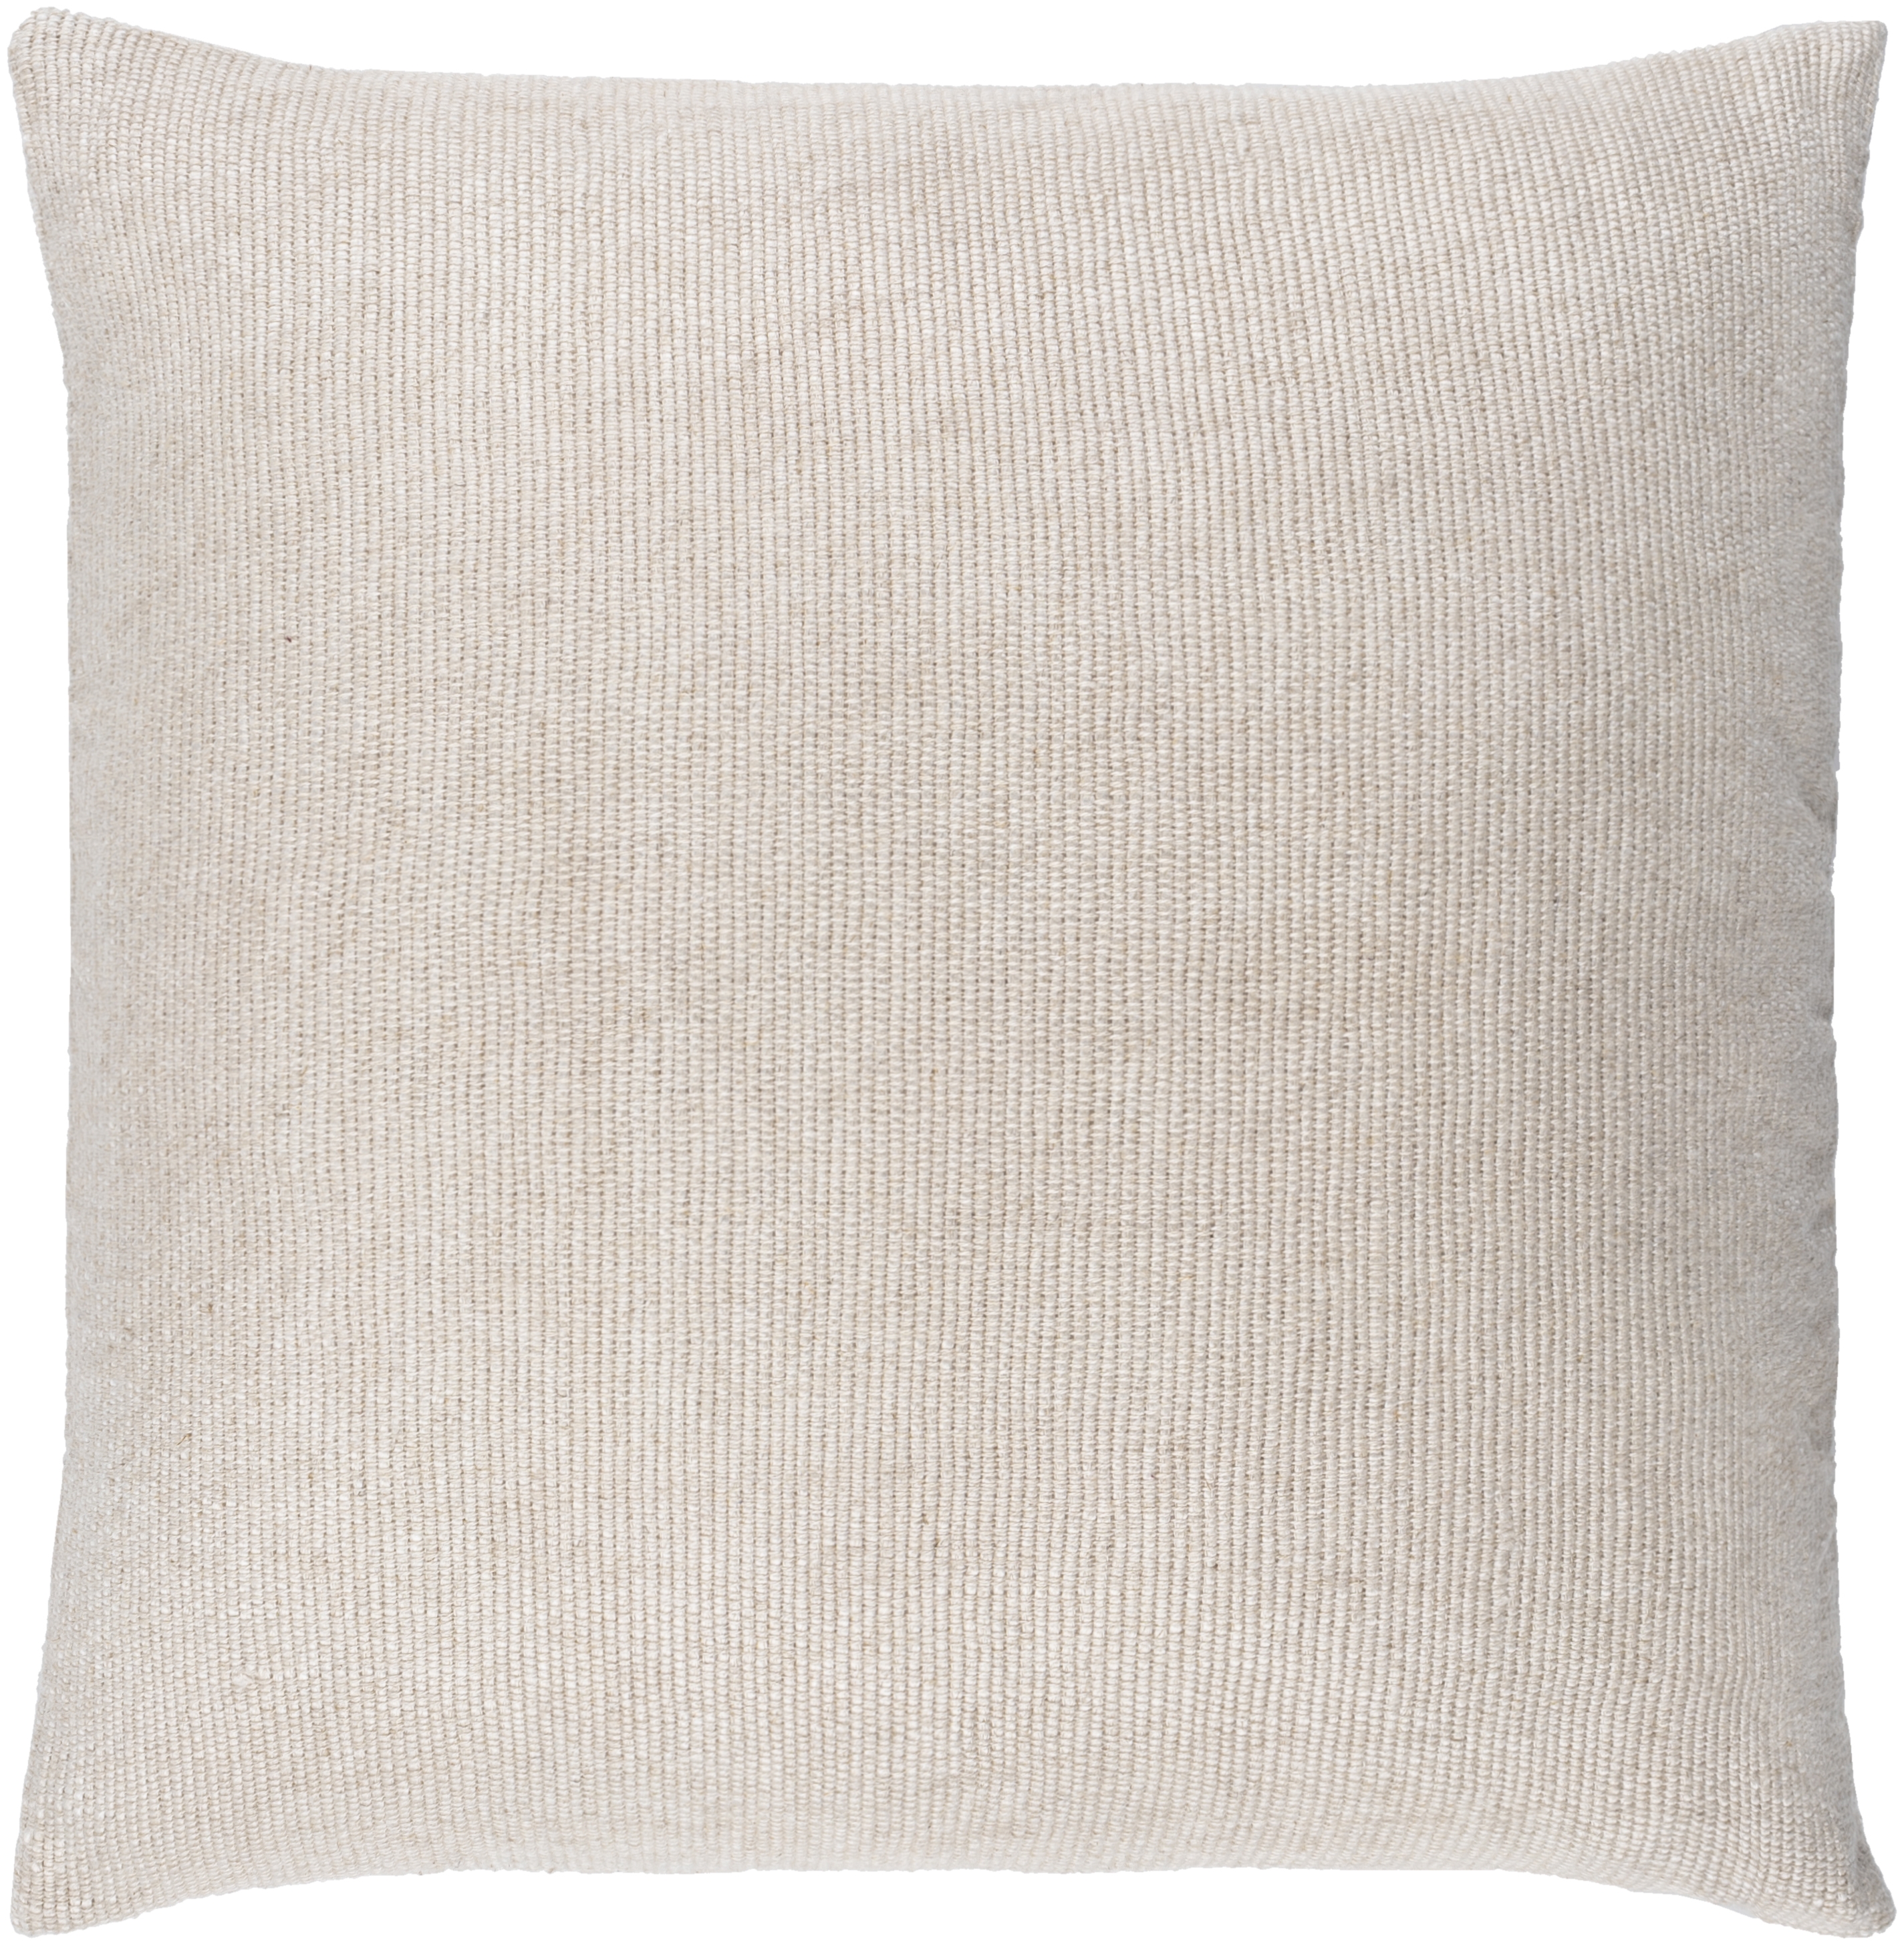 Morley Pillow, 22" x 22" - Polyester insert - Image 0